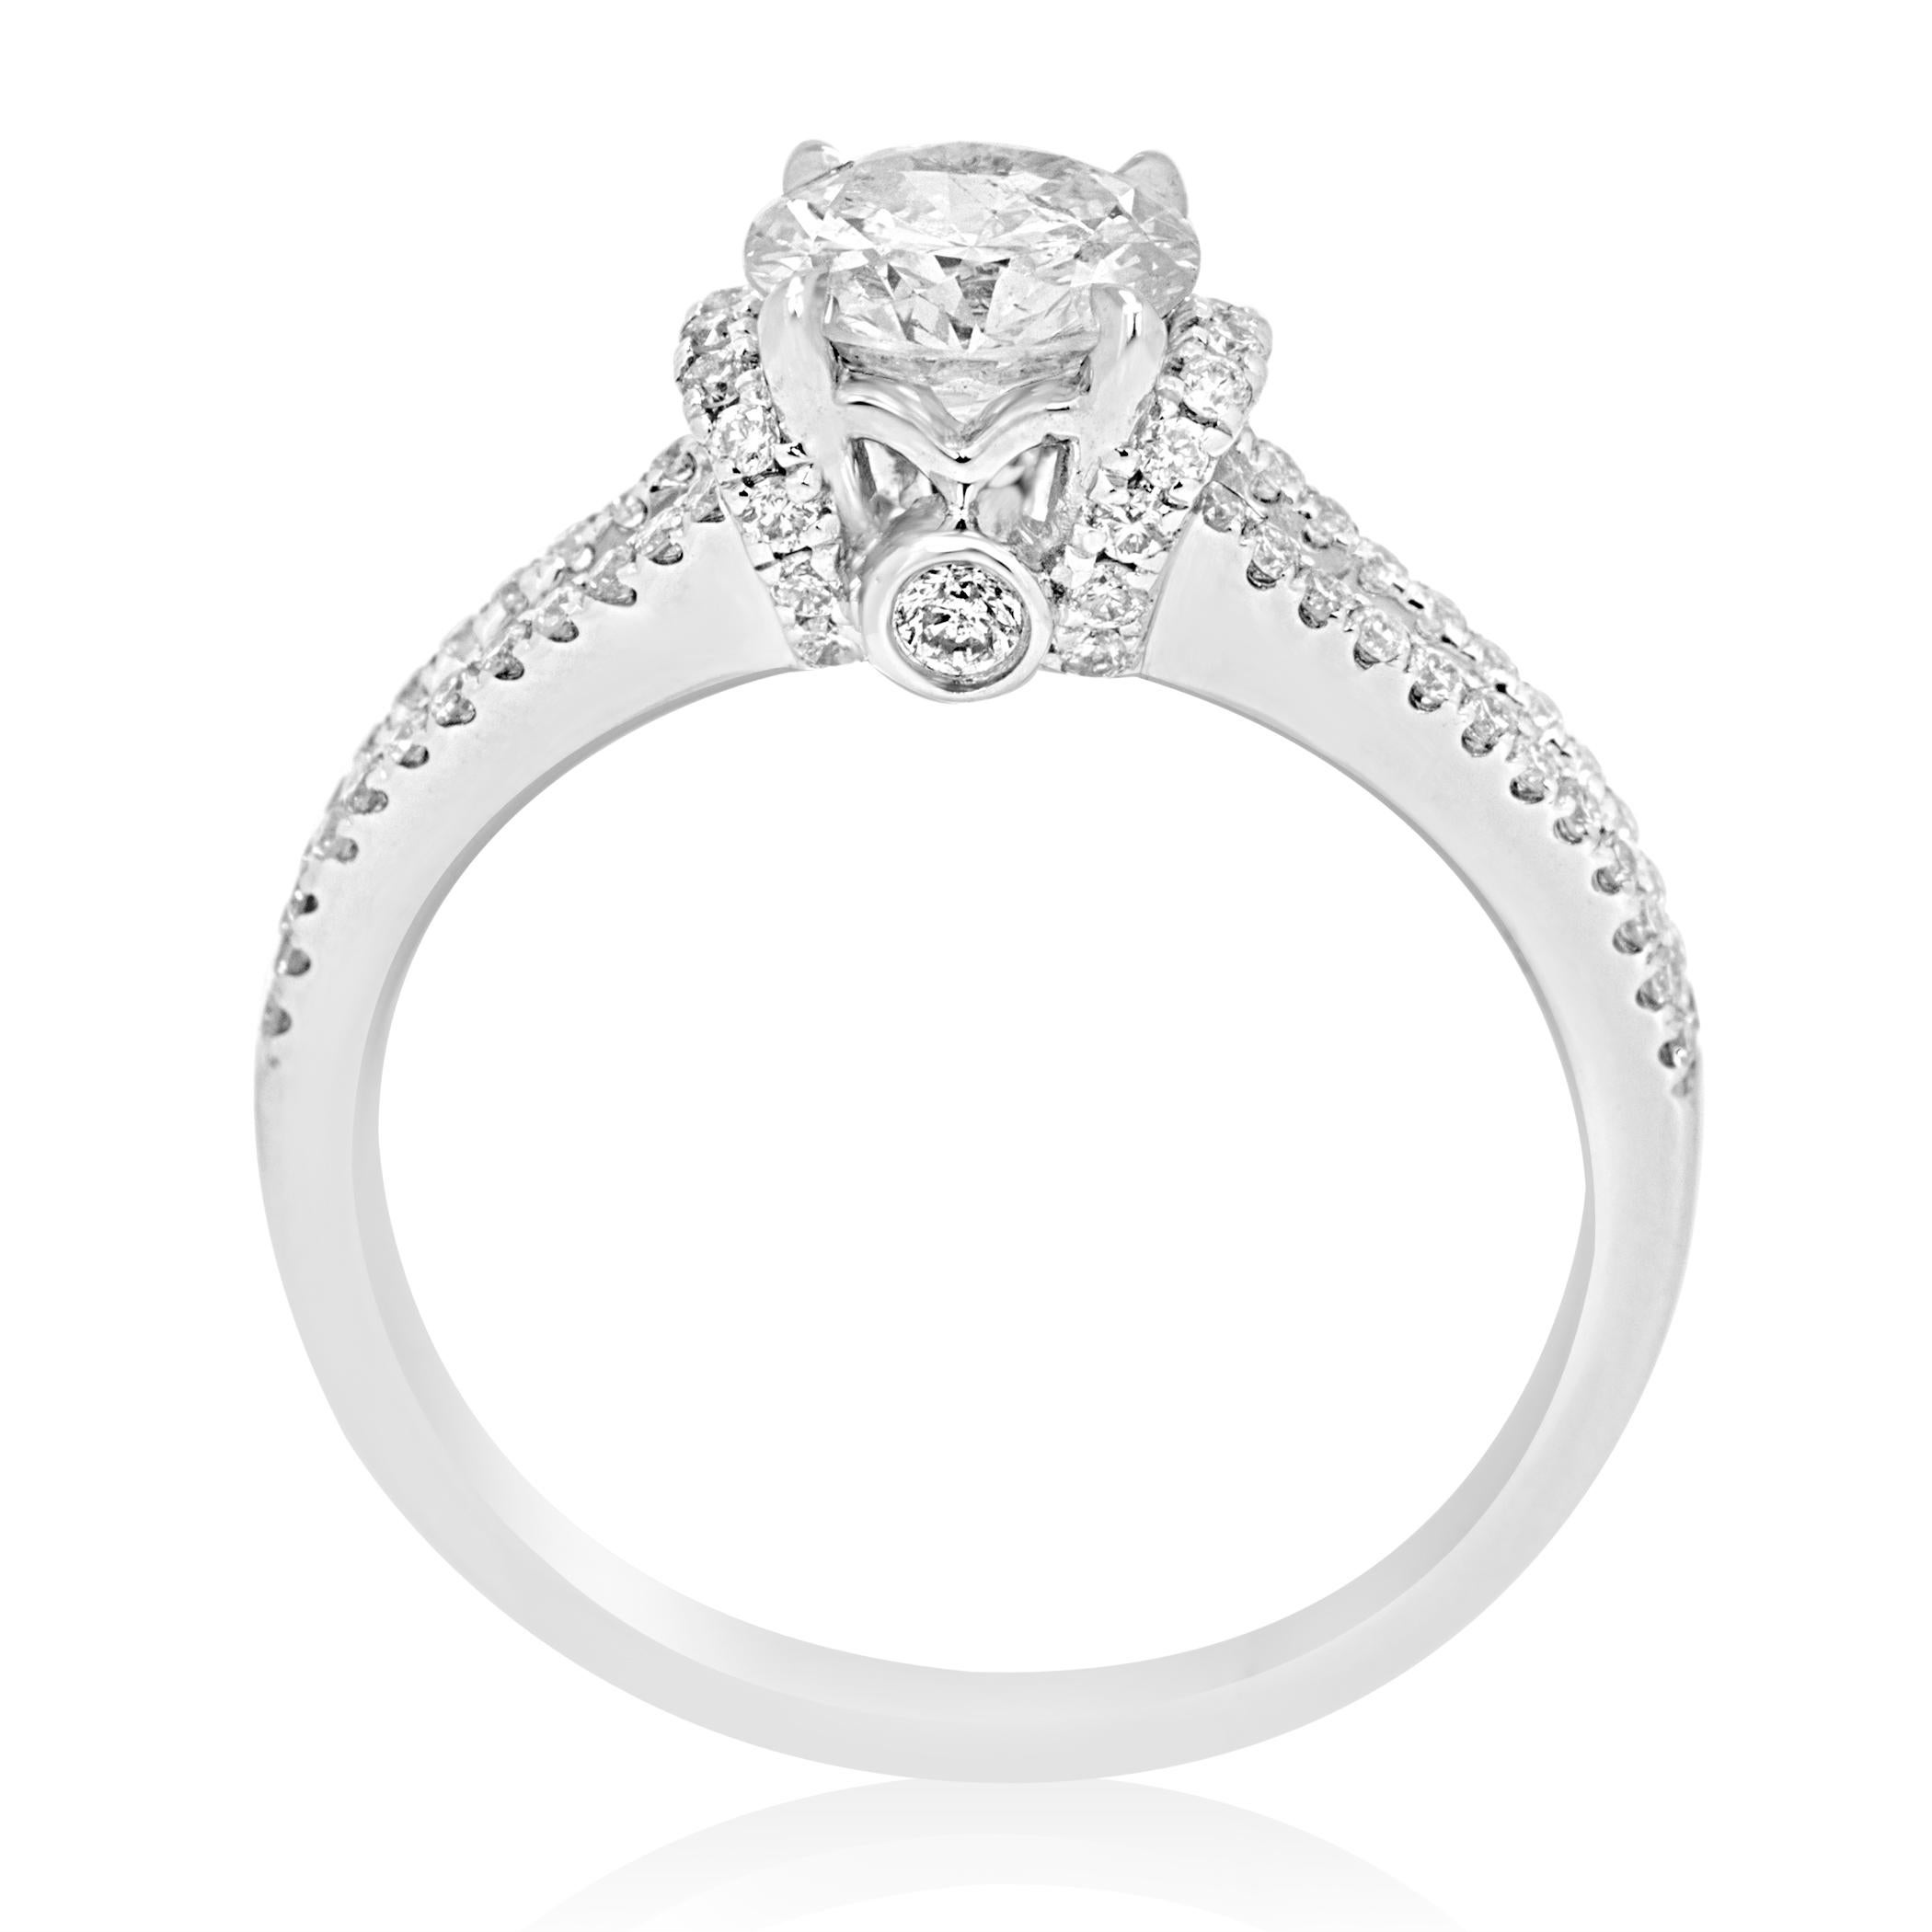 Round Cut White Diamond Round 1.32 Carat Weight Total 14K White Gold Engagement Ring